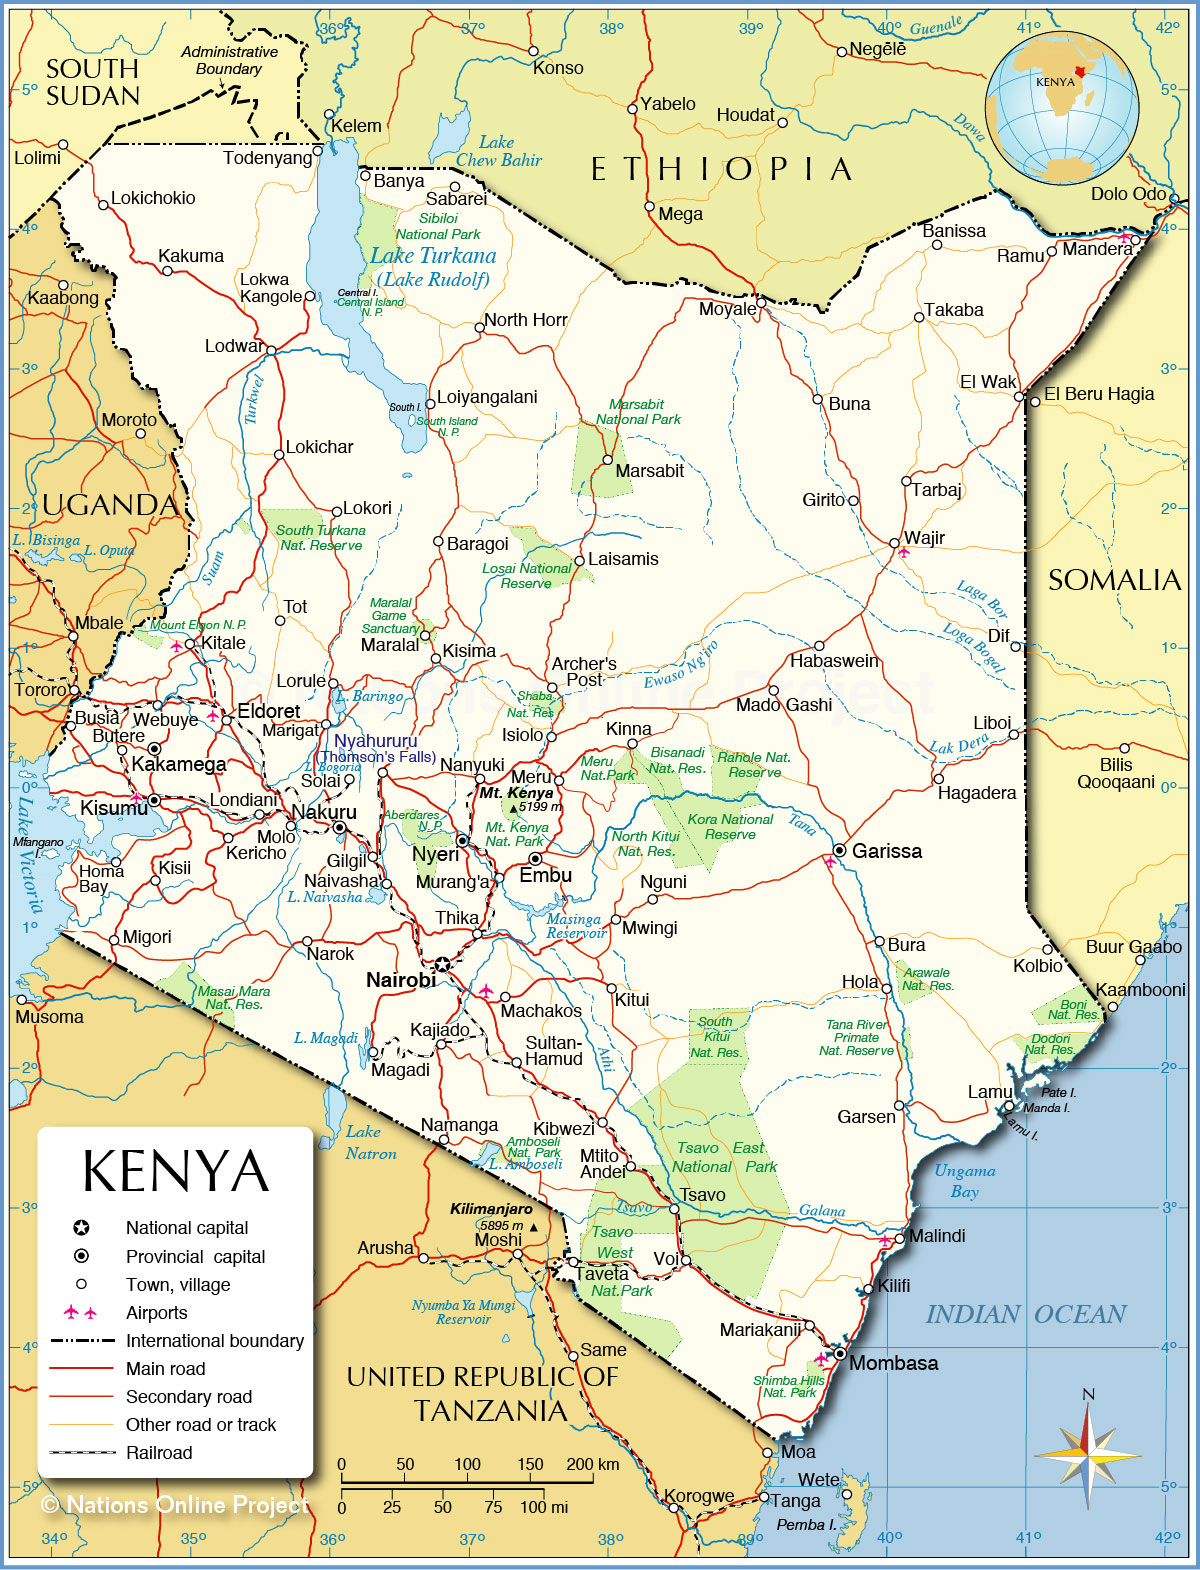 Detailed Map Of Kenya Political Map of Kenya   Nations Online Project